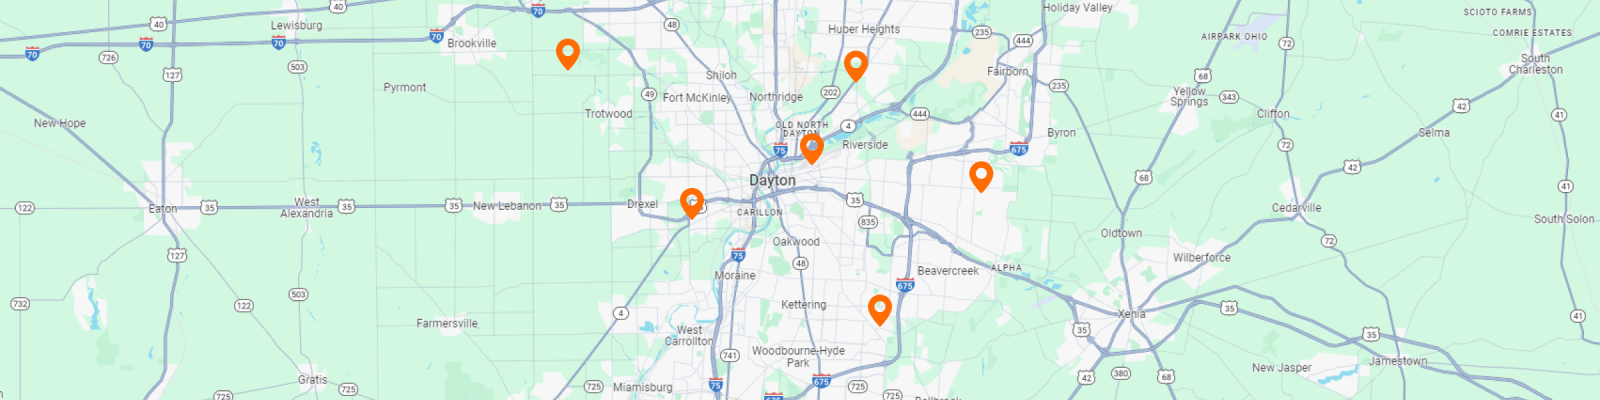 Dayton Service Areas Map